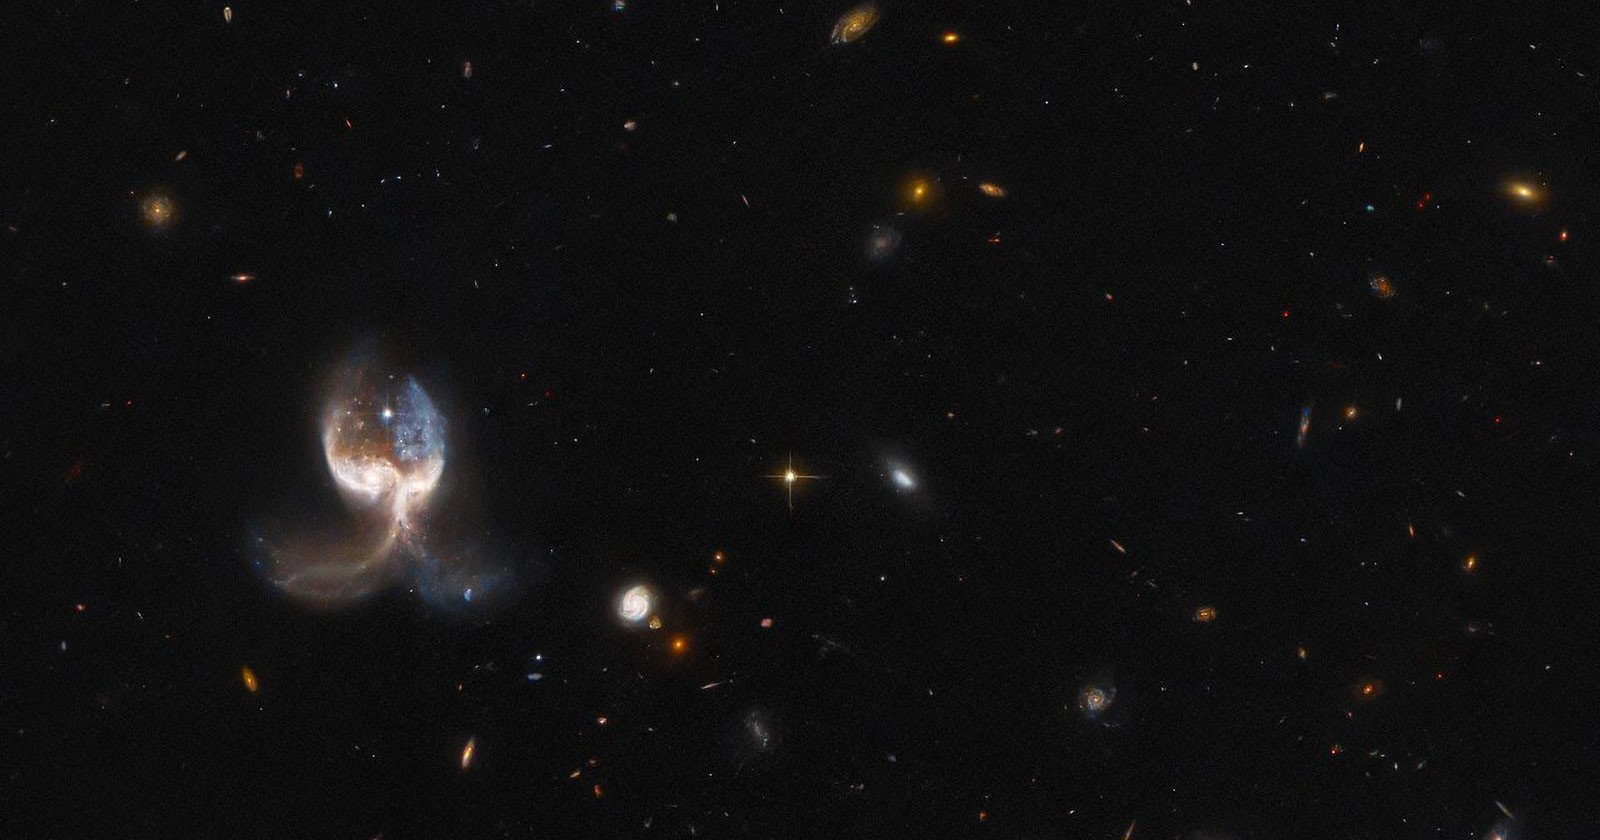  hubble photo colliding galaxies looks like pair angelic 